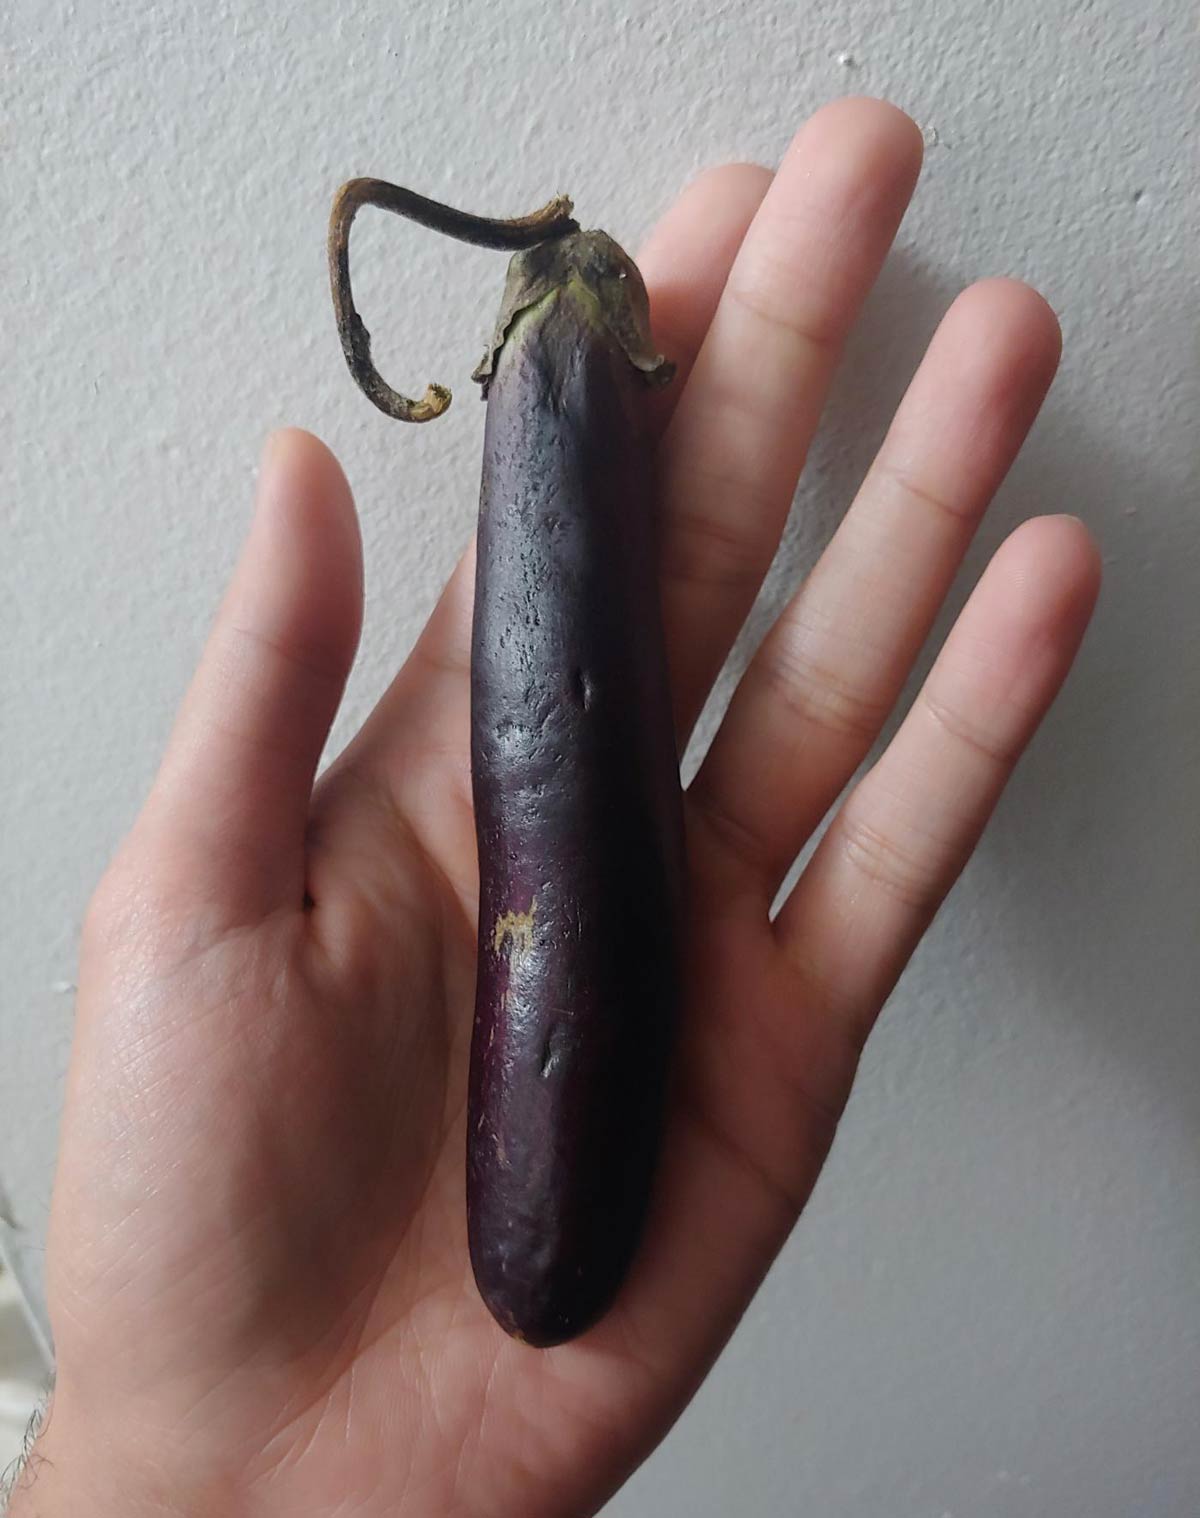 An eggplant representative of the average man